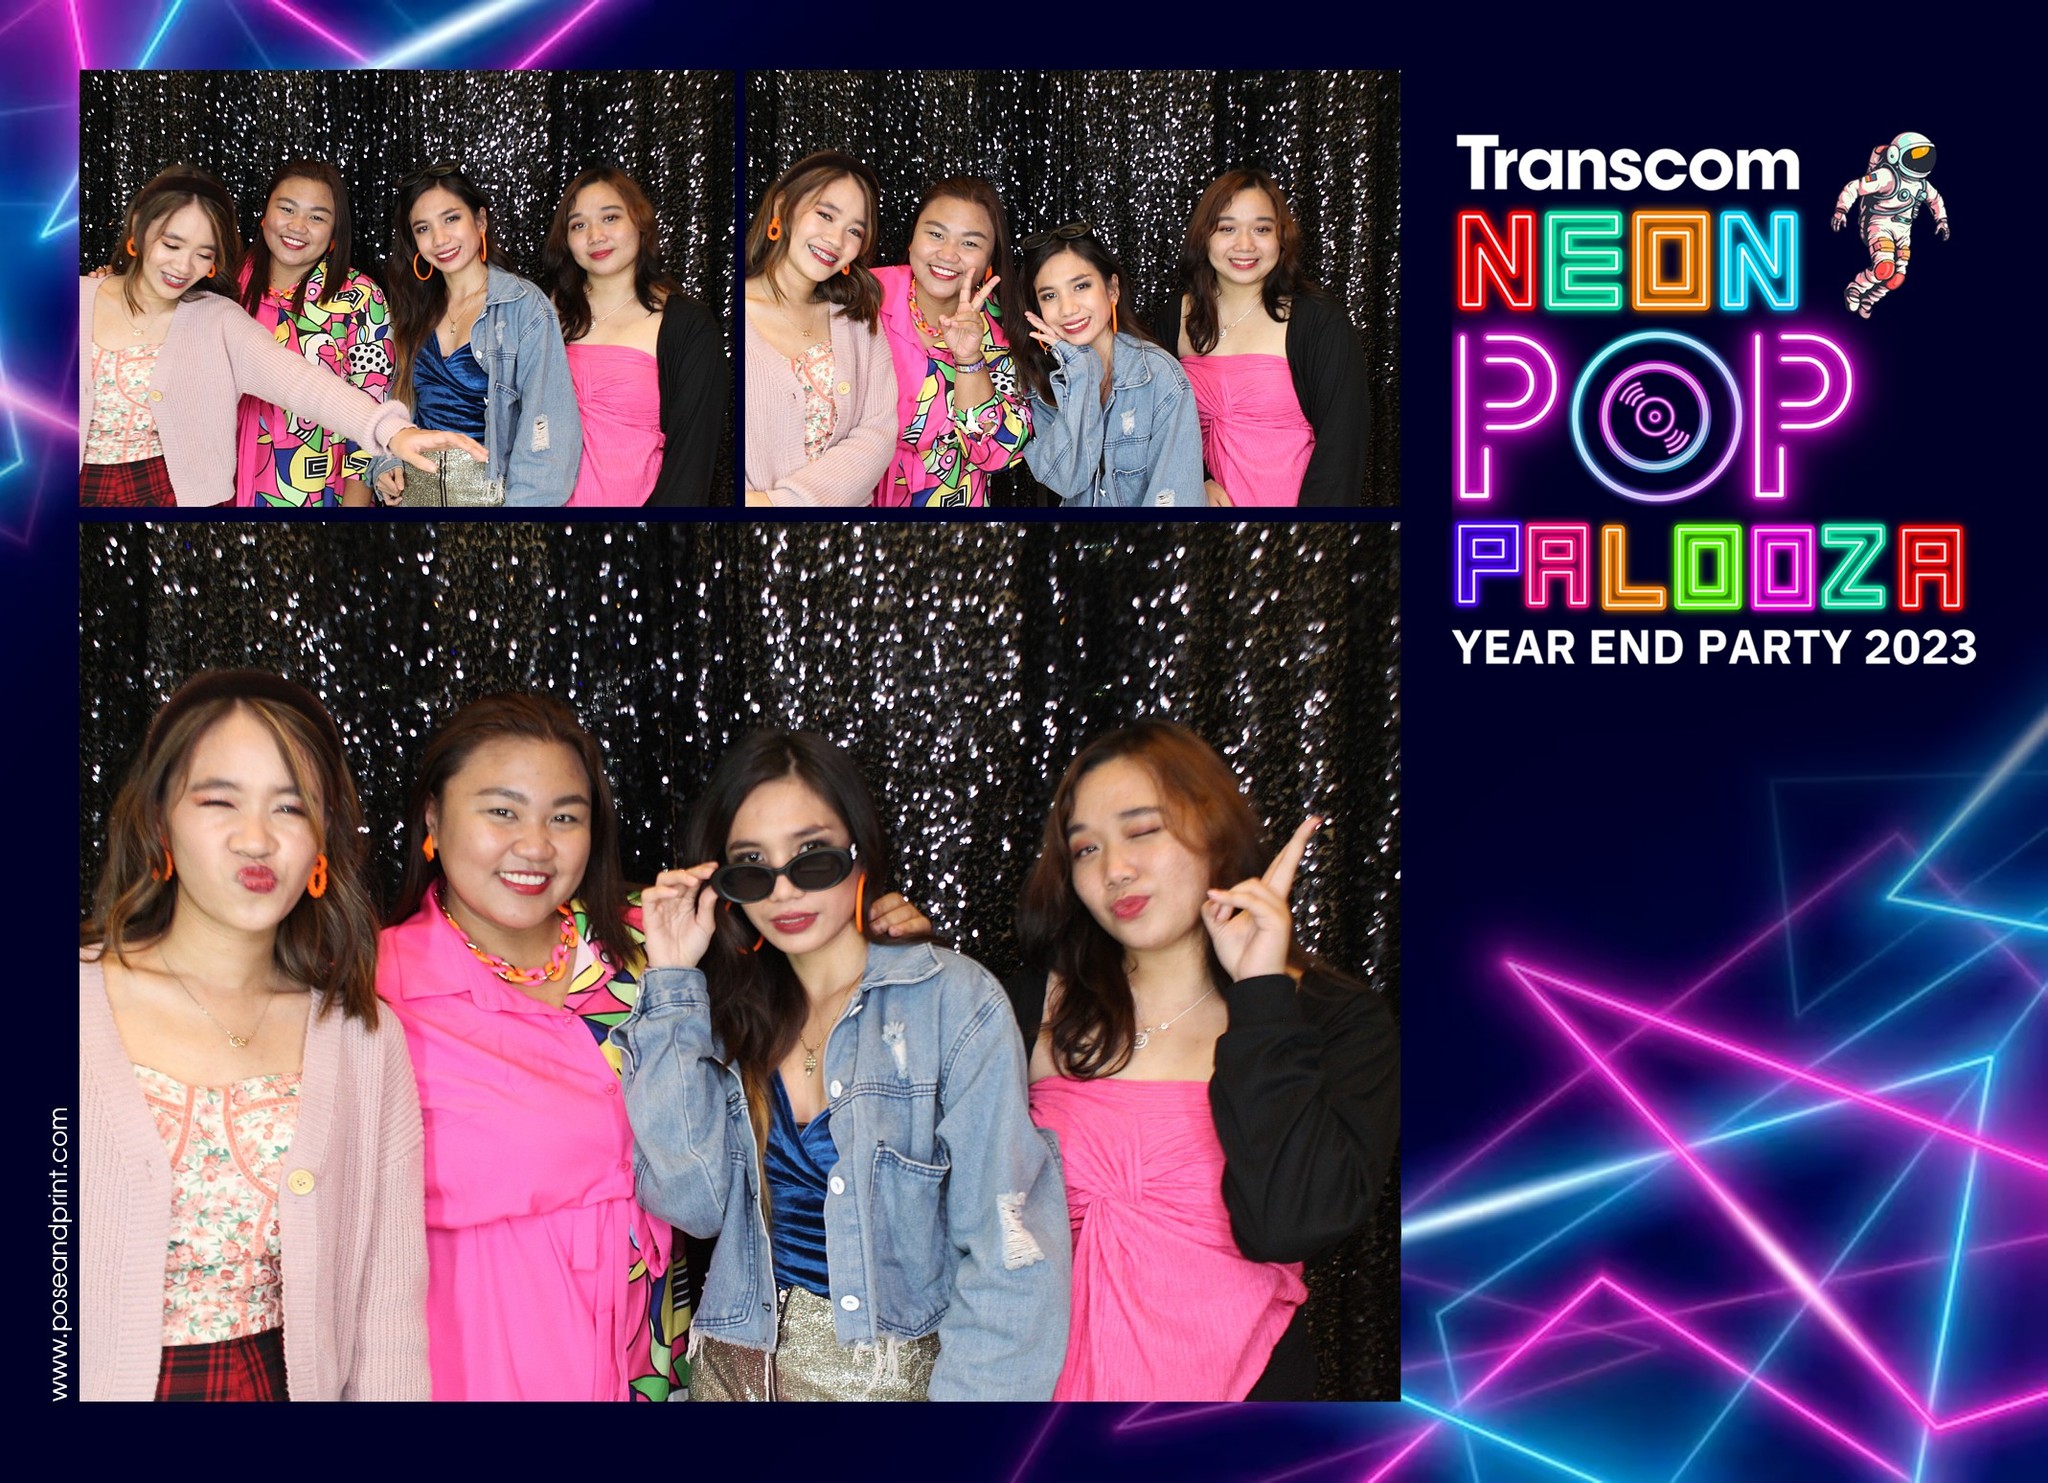 Transcom Neon Pop Palooza YEP 2023 Booth 1